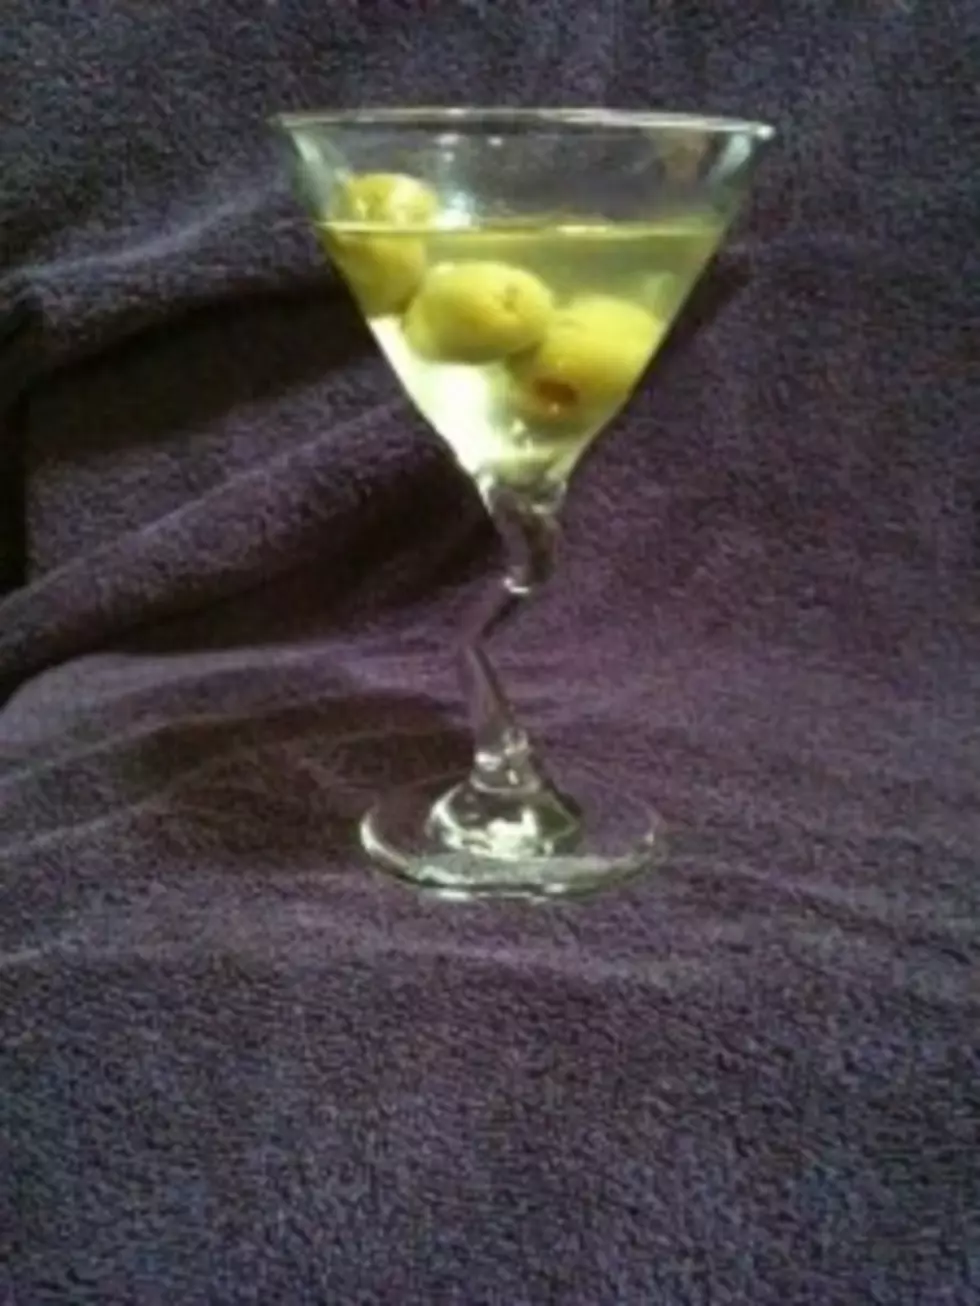 Happy National Martini Day!